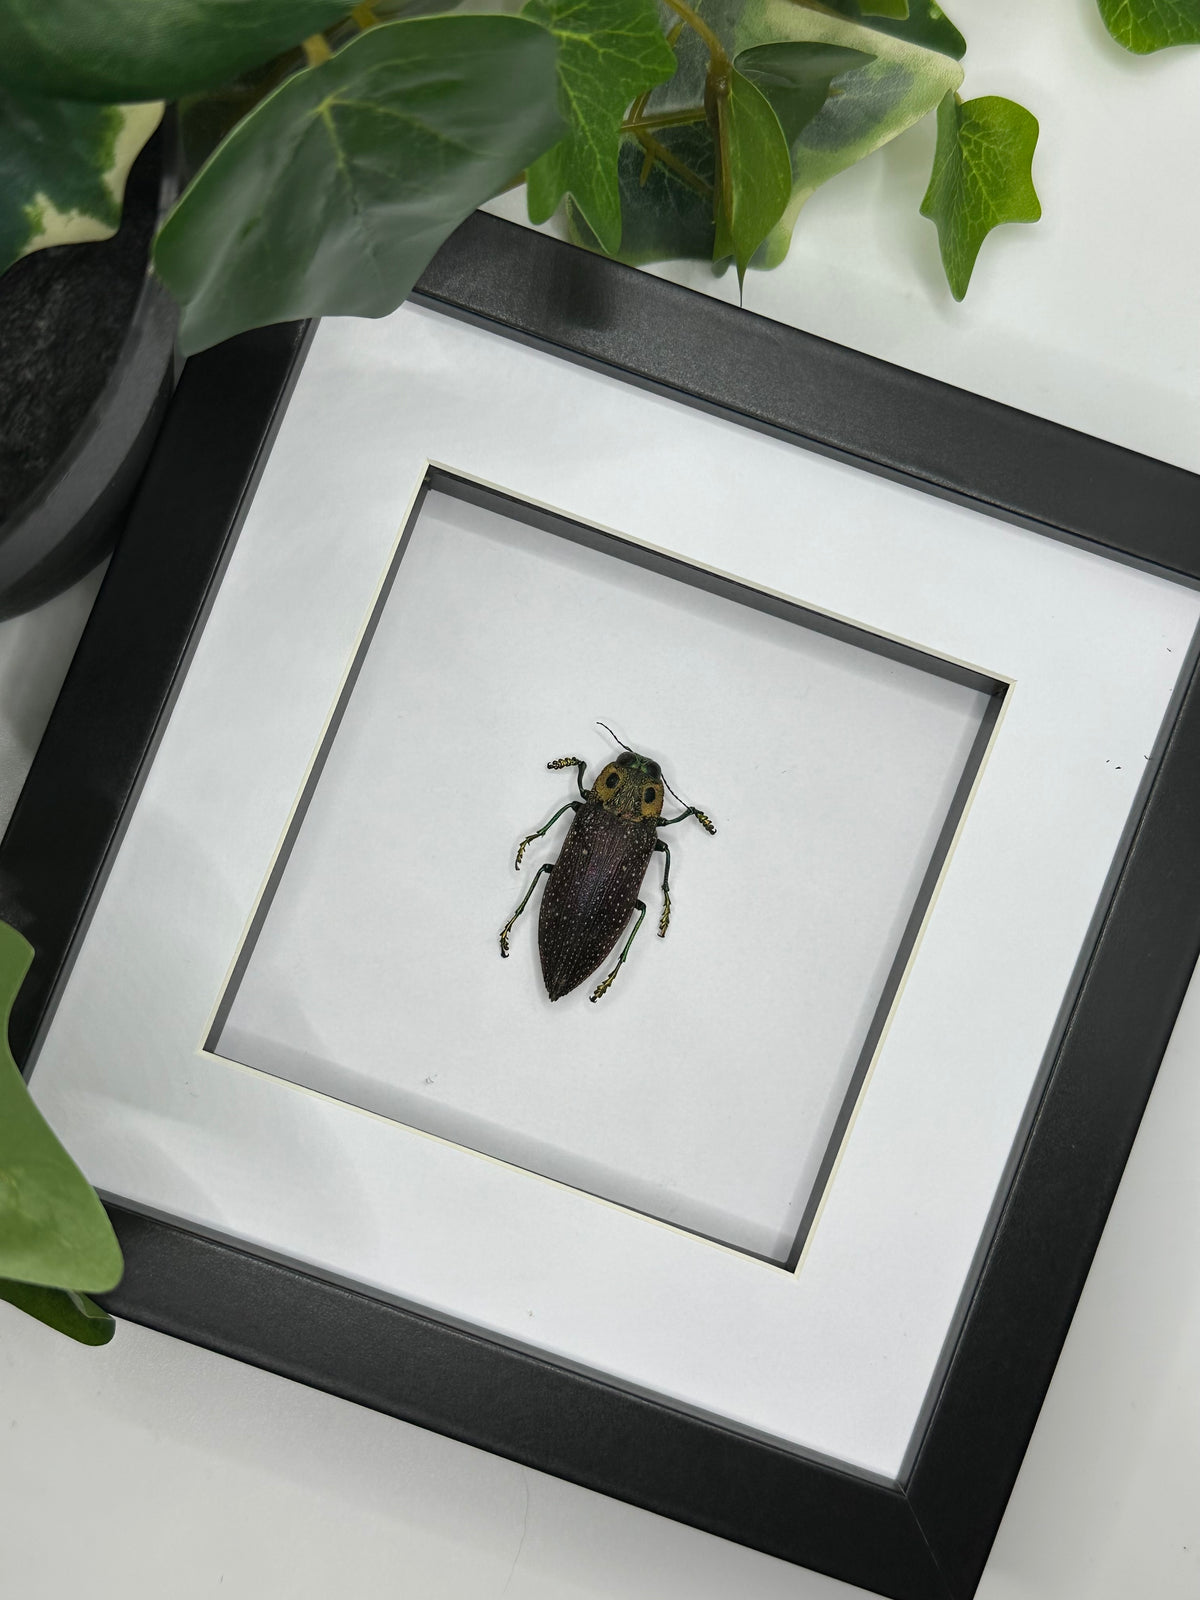 Jewel Beetle / Lampropepla Rothschildi in a frame